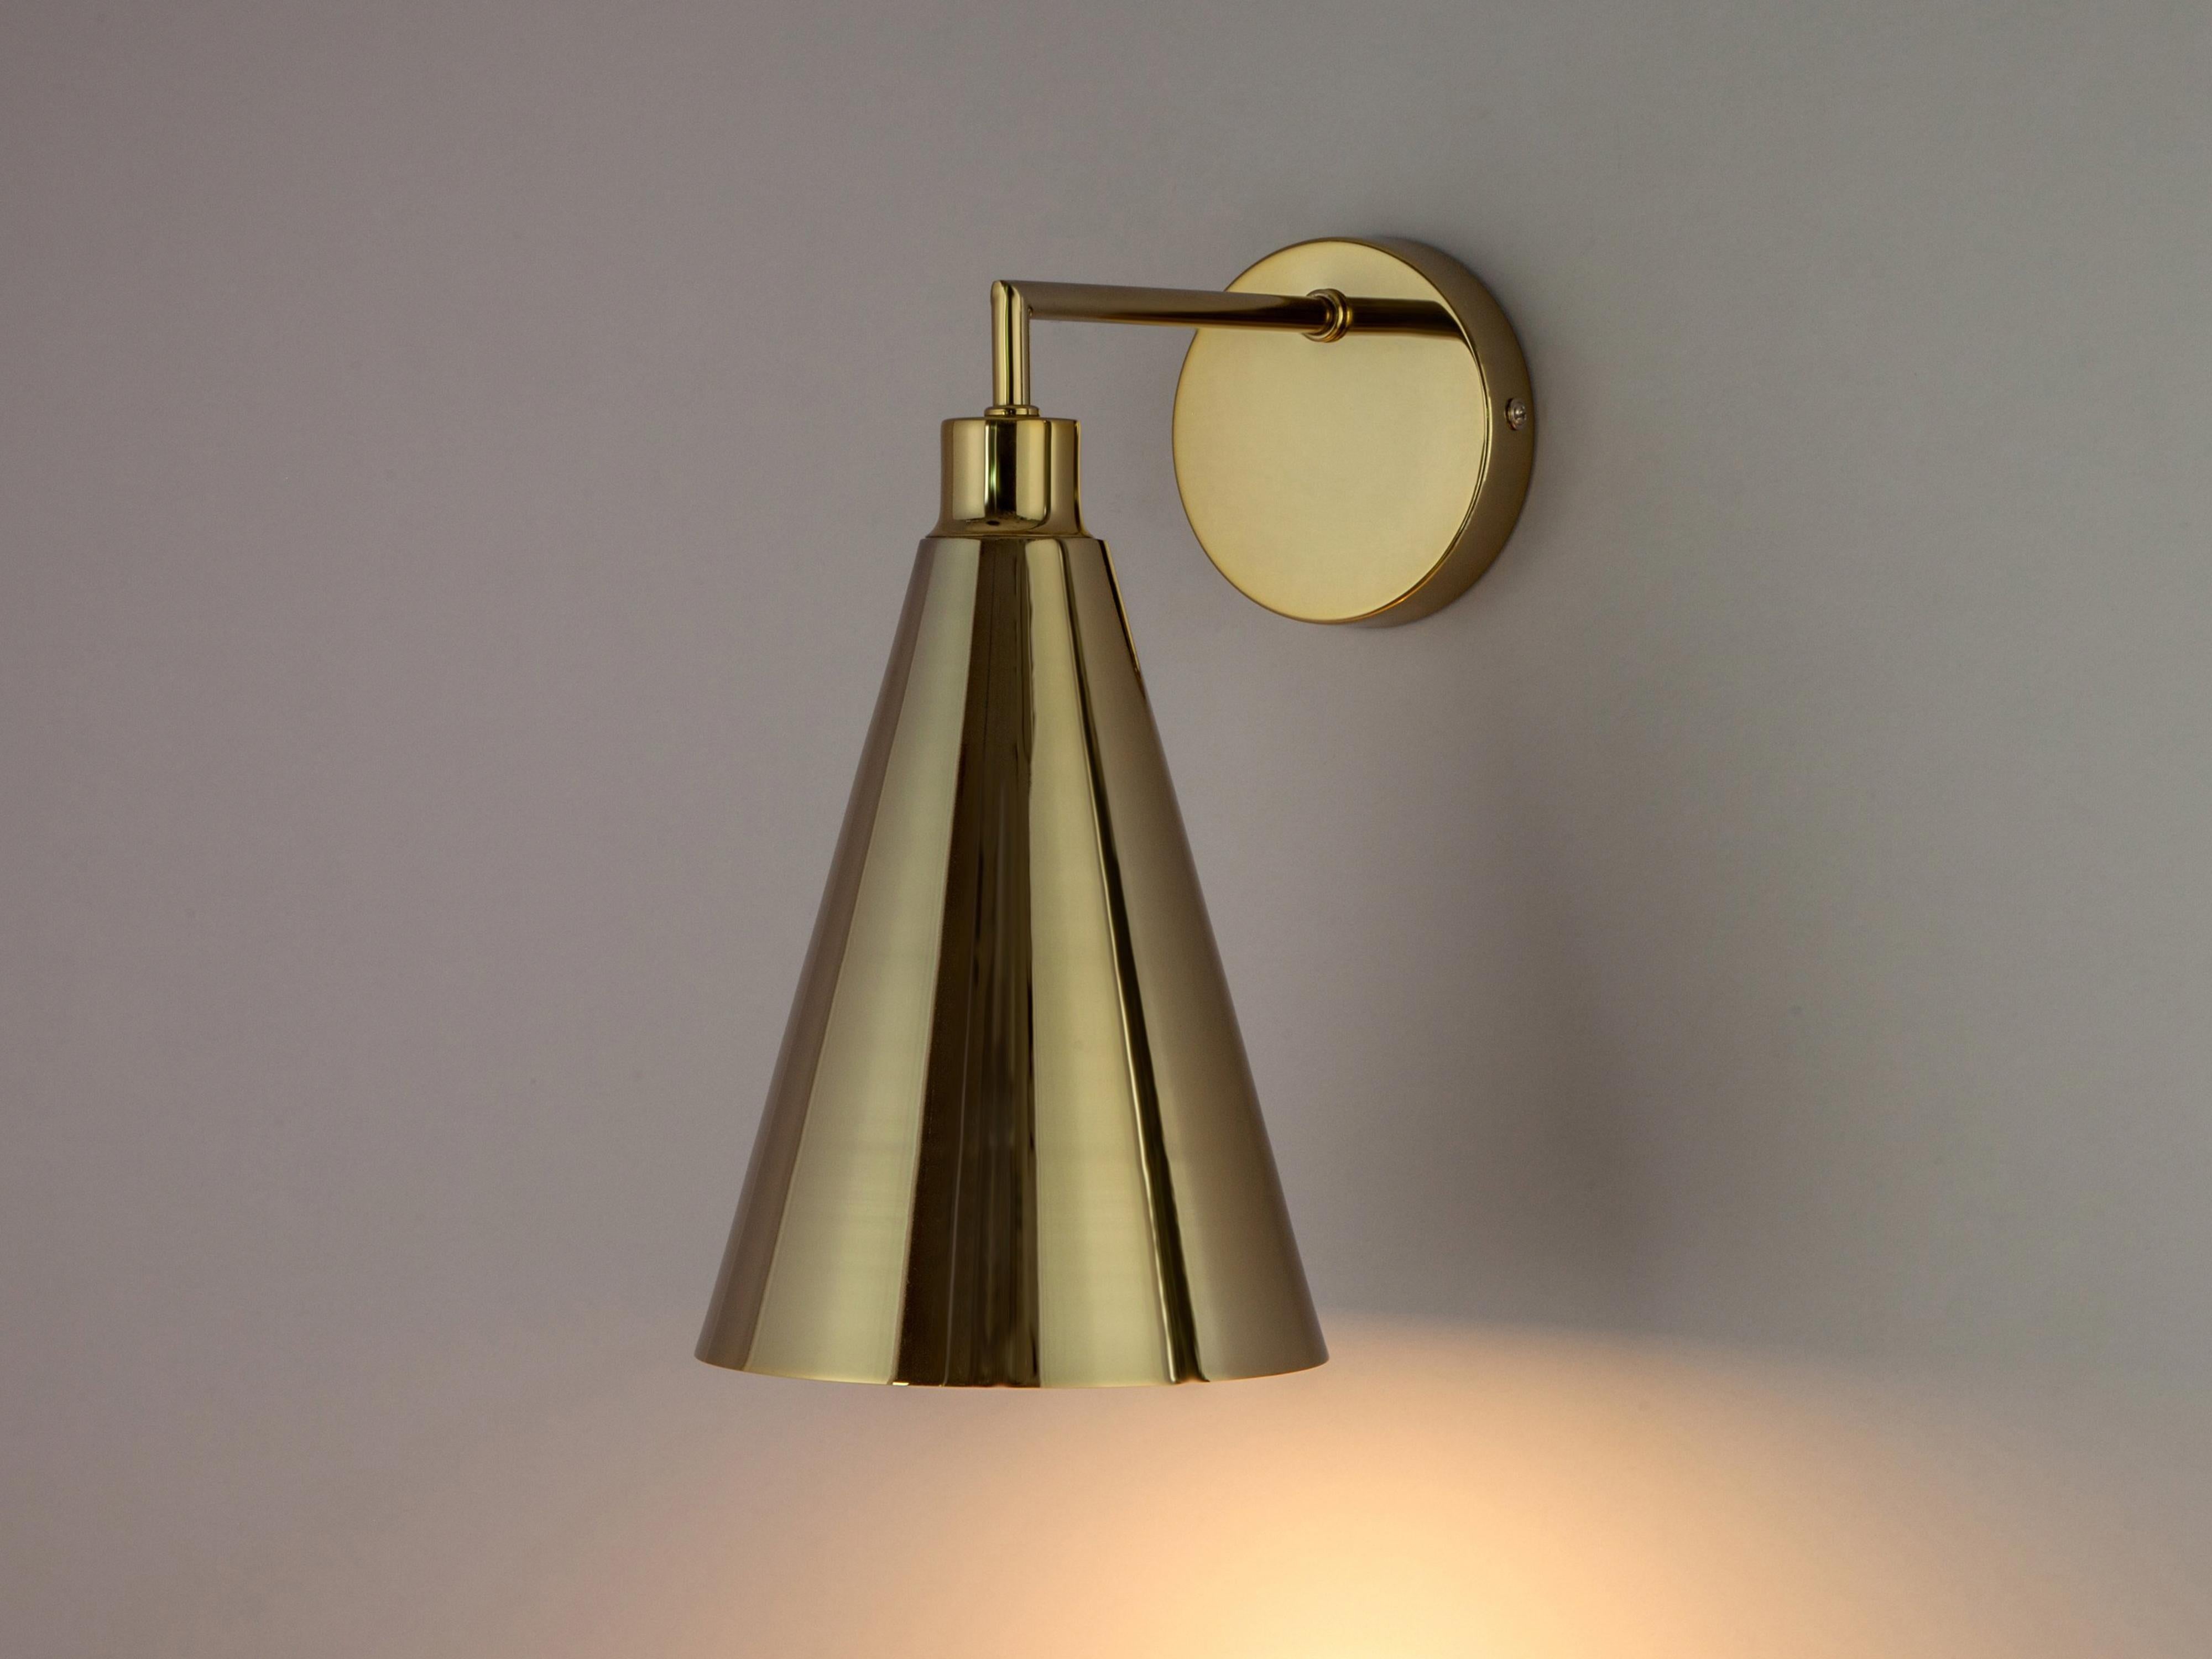 Scandinavian Modern Houseof Brass Cone Shade Wall Light with Metal and Brass For Sale